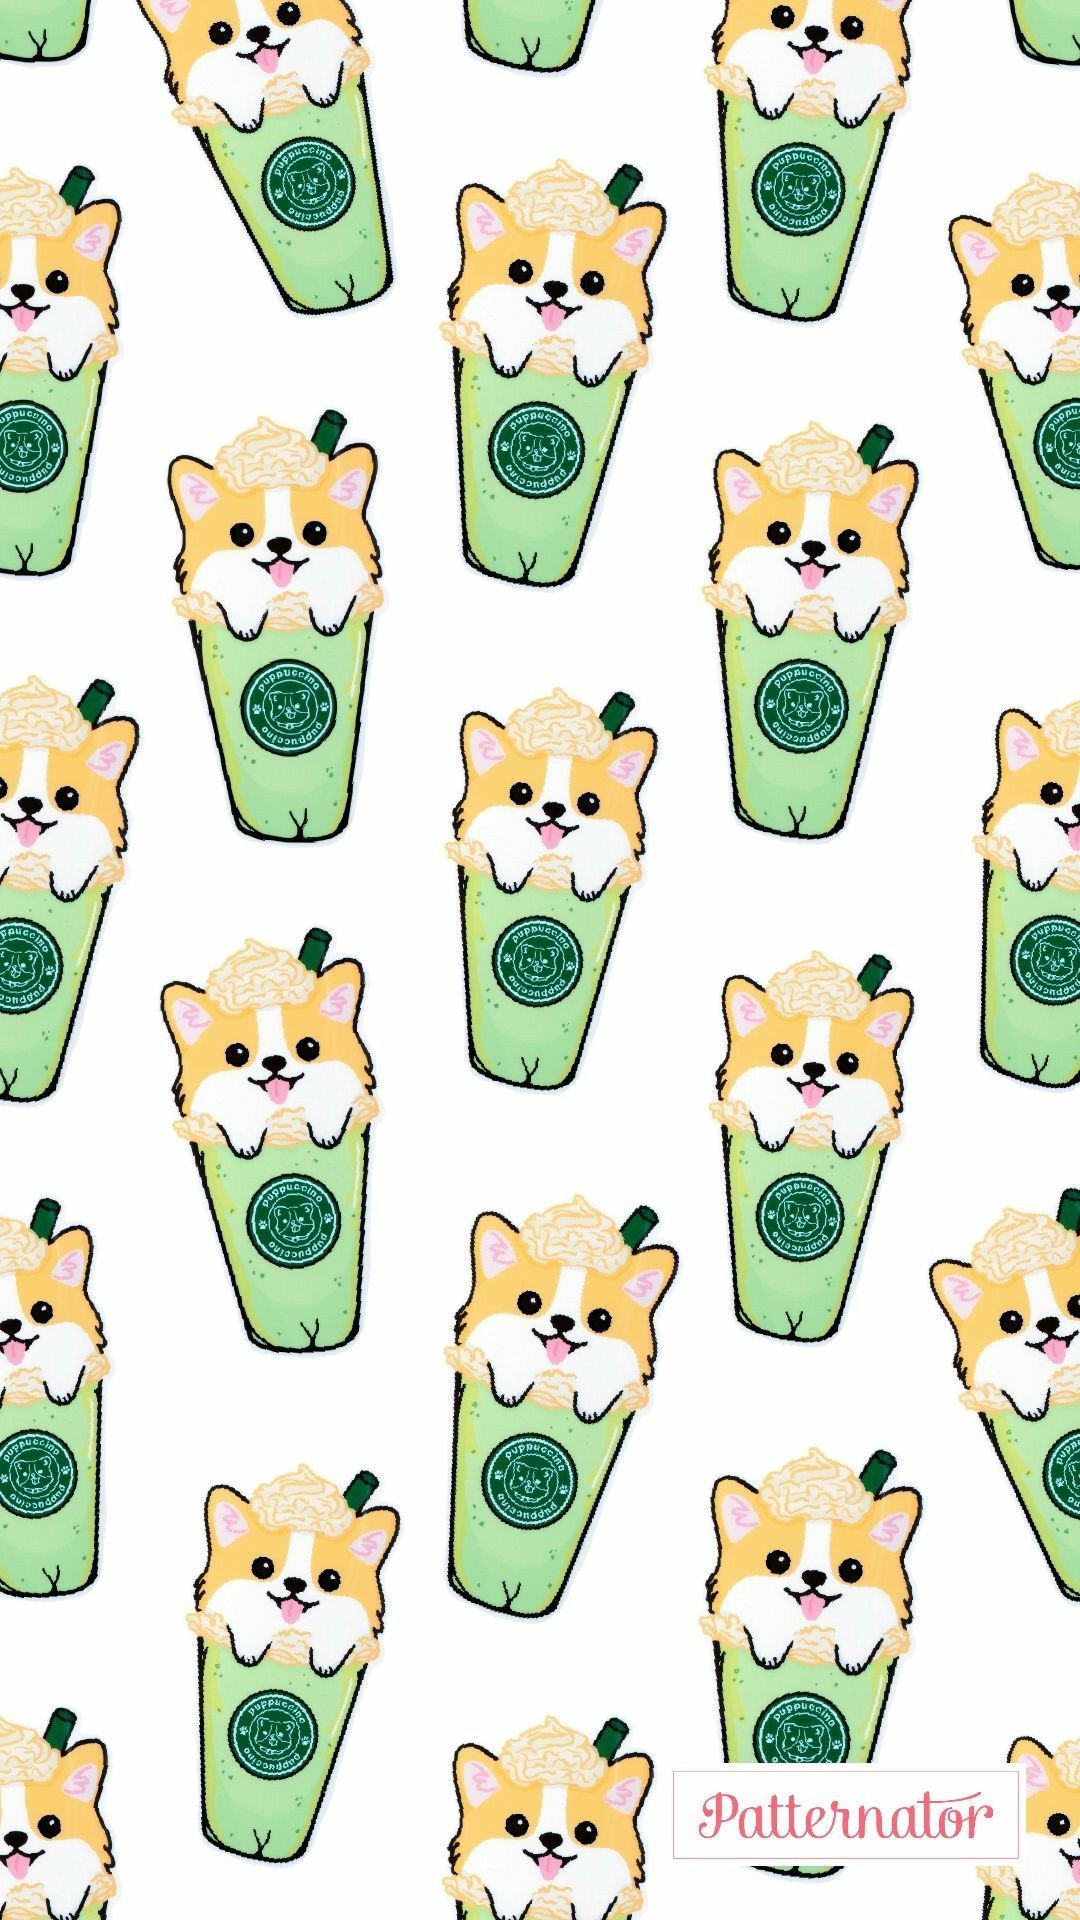 Dog Cute Kawaii iPhone Wallpapers - Wallpaper Cave